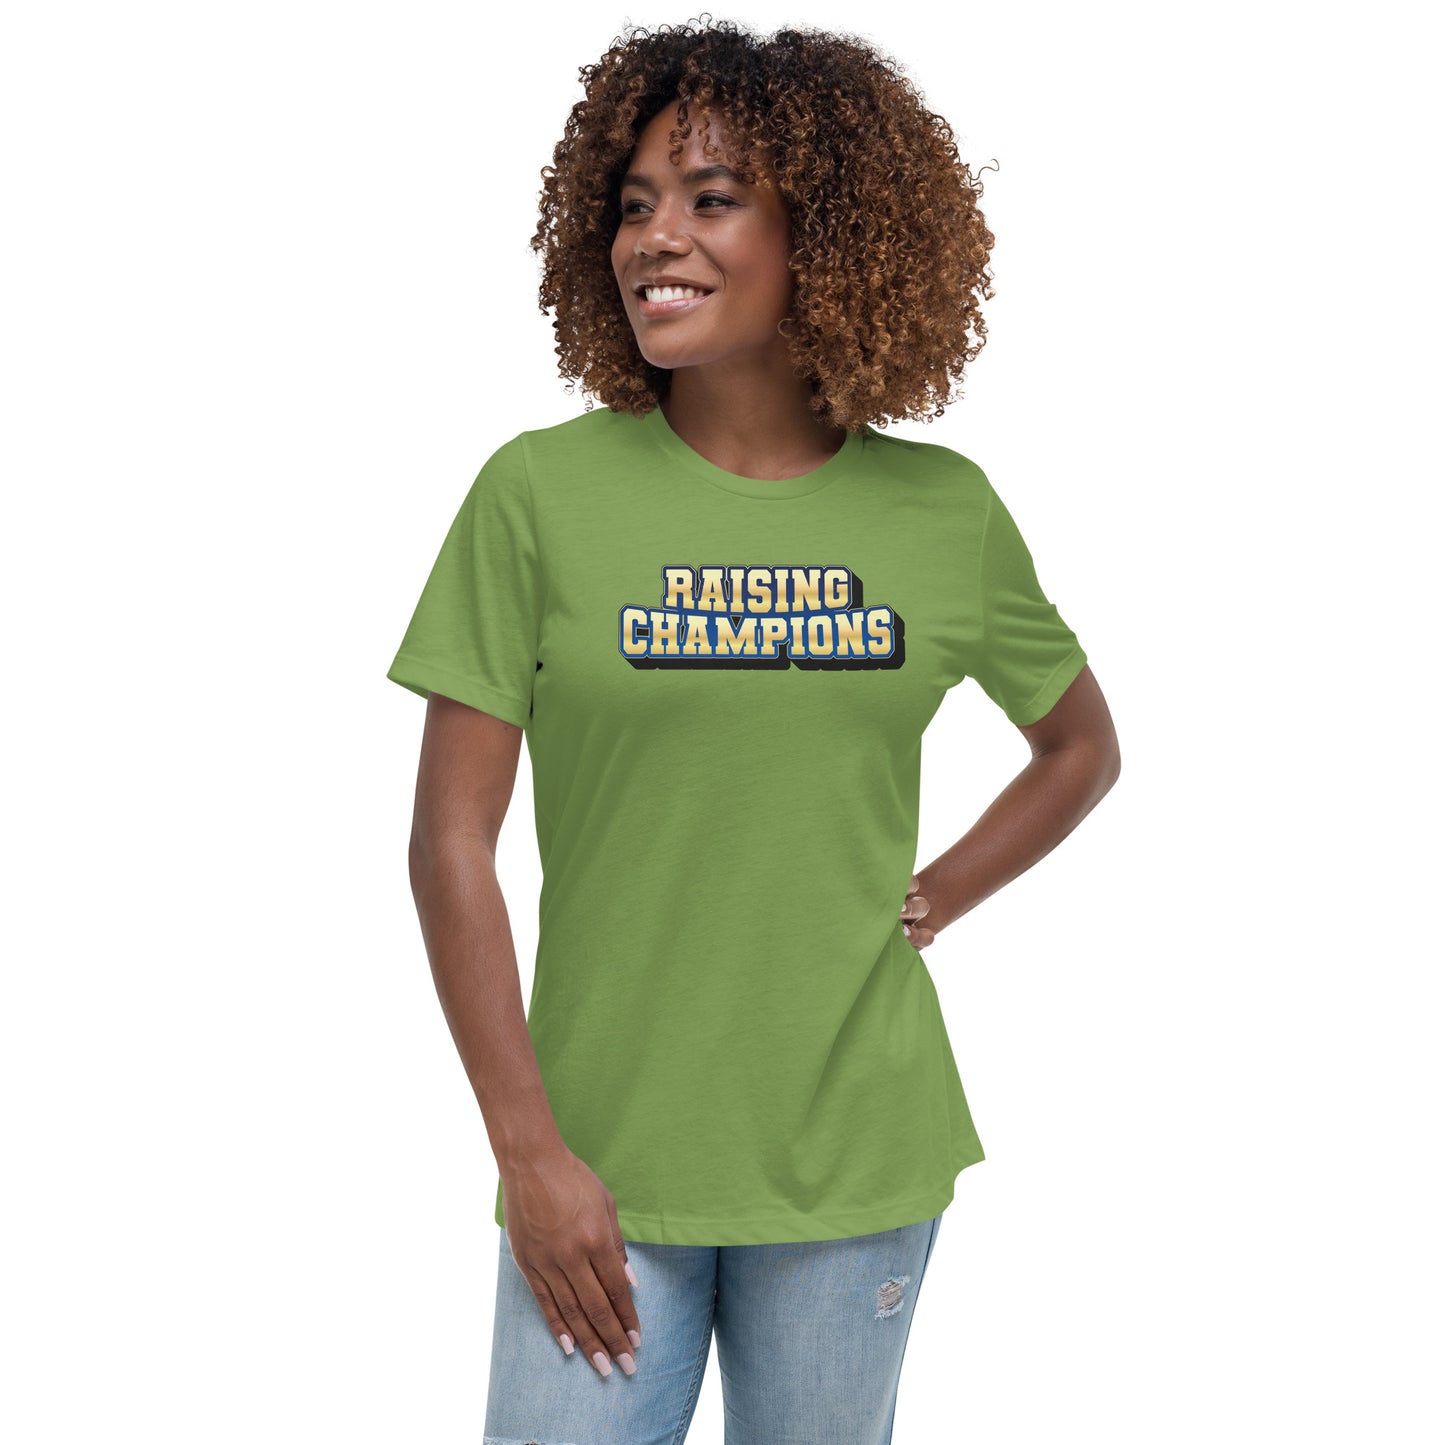 Raising Champions Women's Relaxed T-Shirt